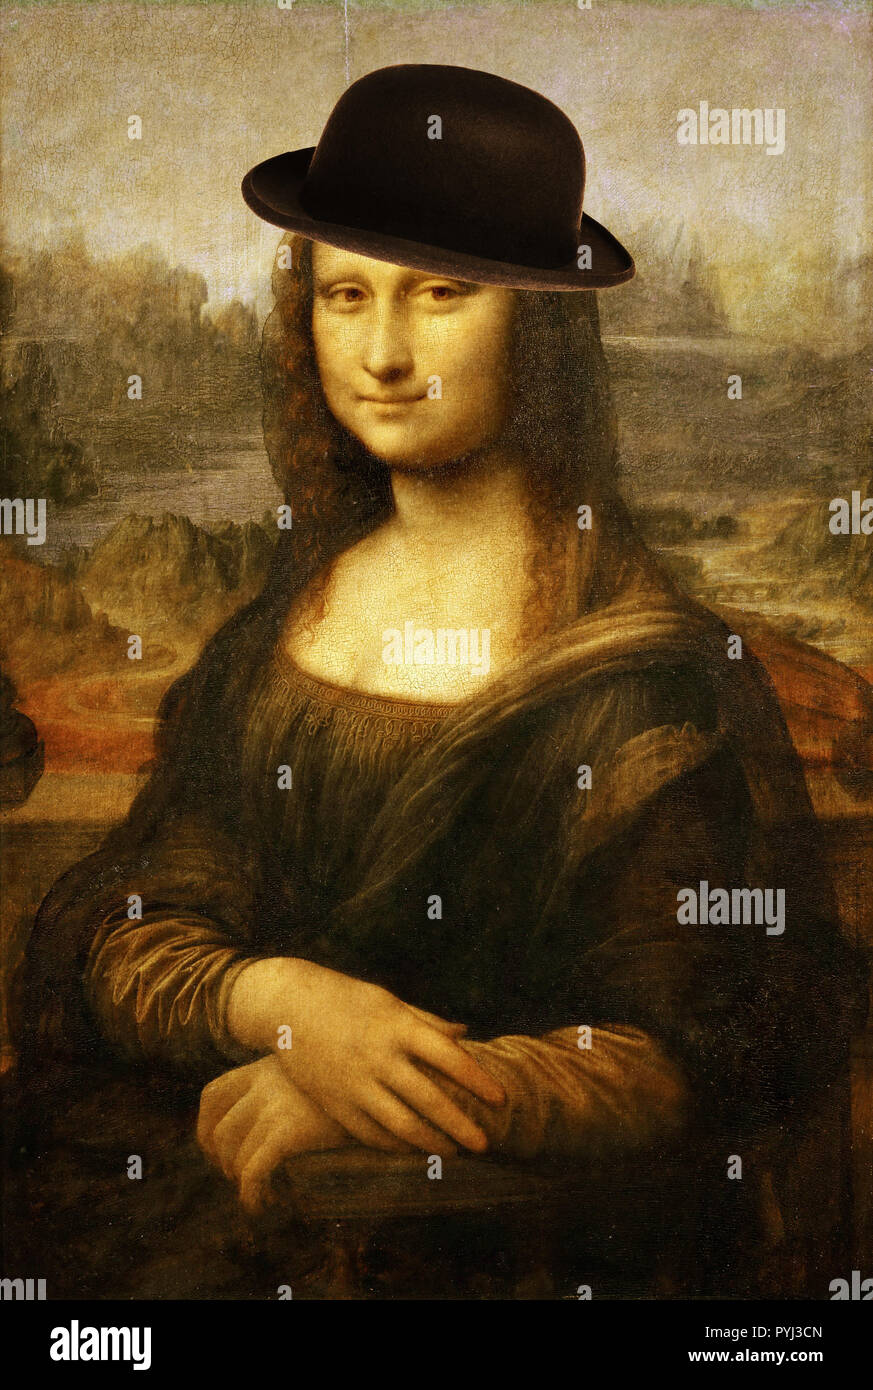 Berühmte Gemälde von Leonardo da Vinci Mona Lisa einen Hut tragen, digital geändert Stockfoto